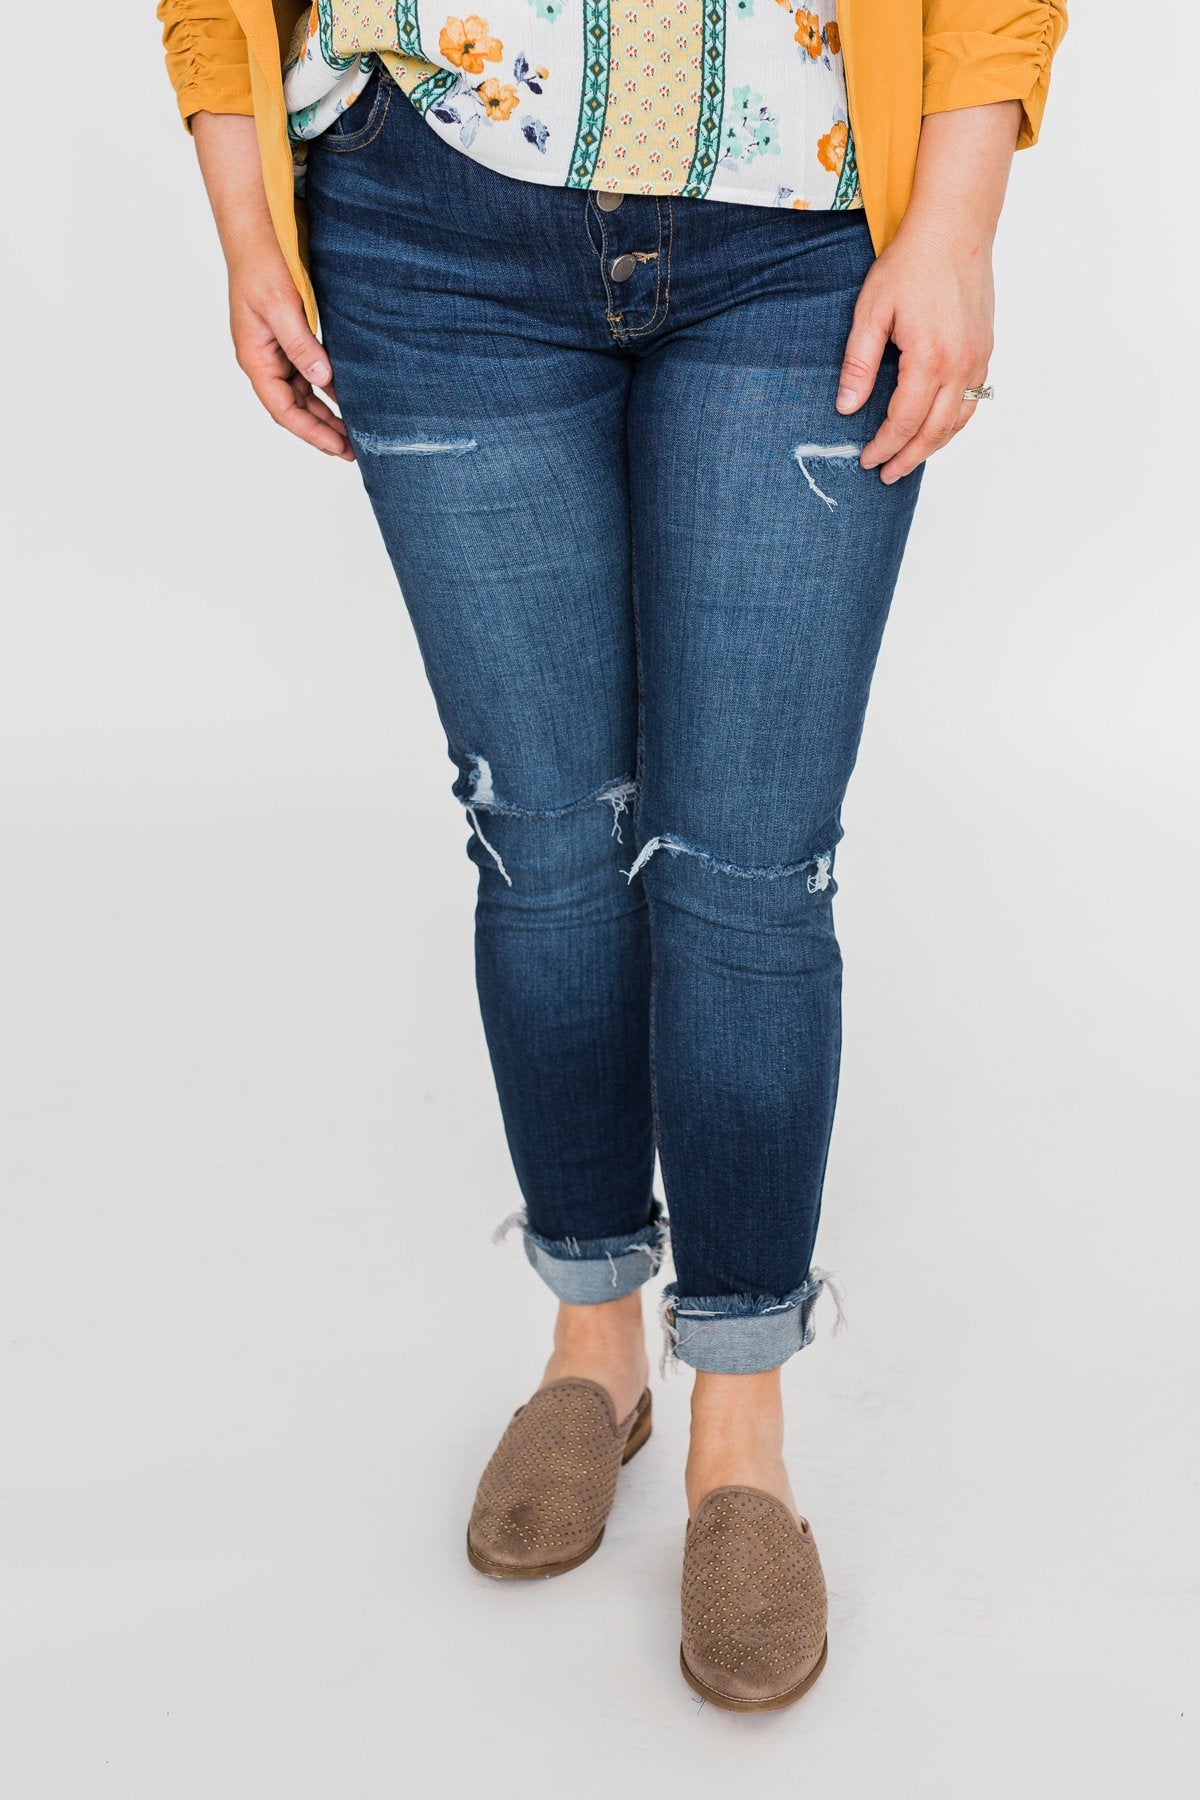 C'est Toi Distressed Skinny Jeans- Jade Wash